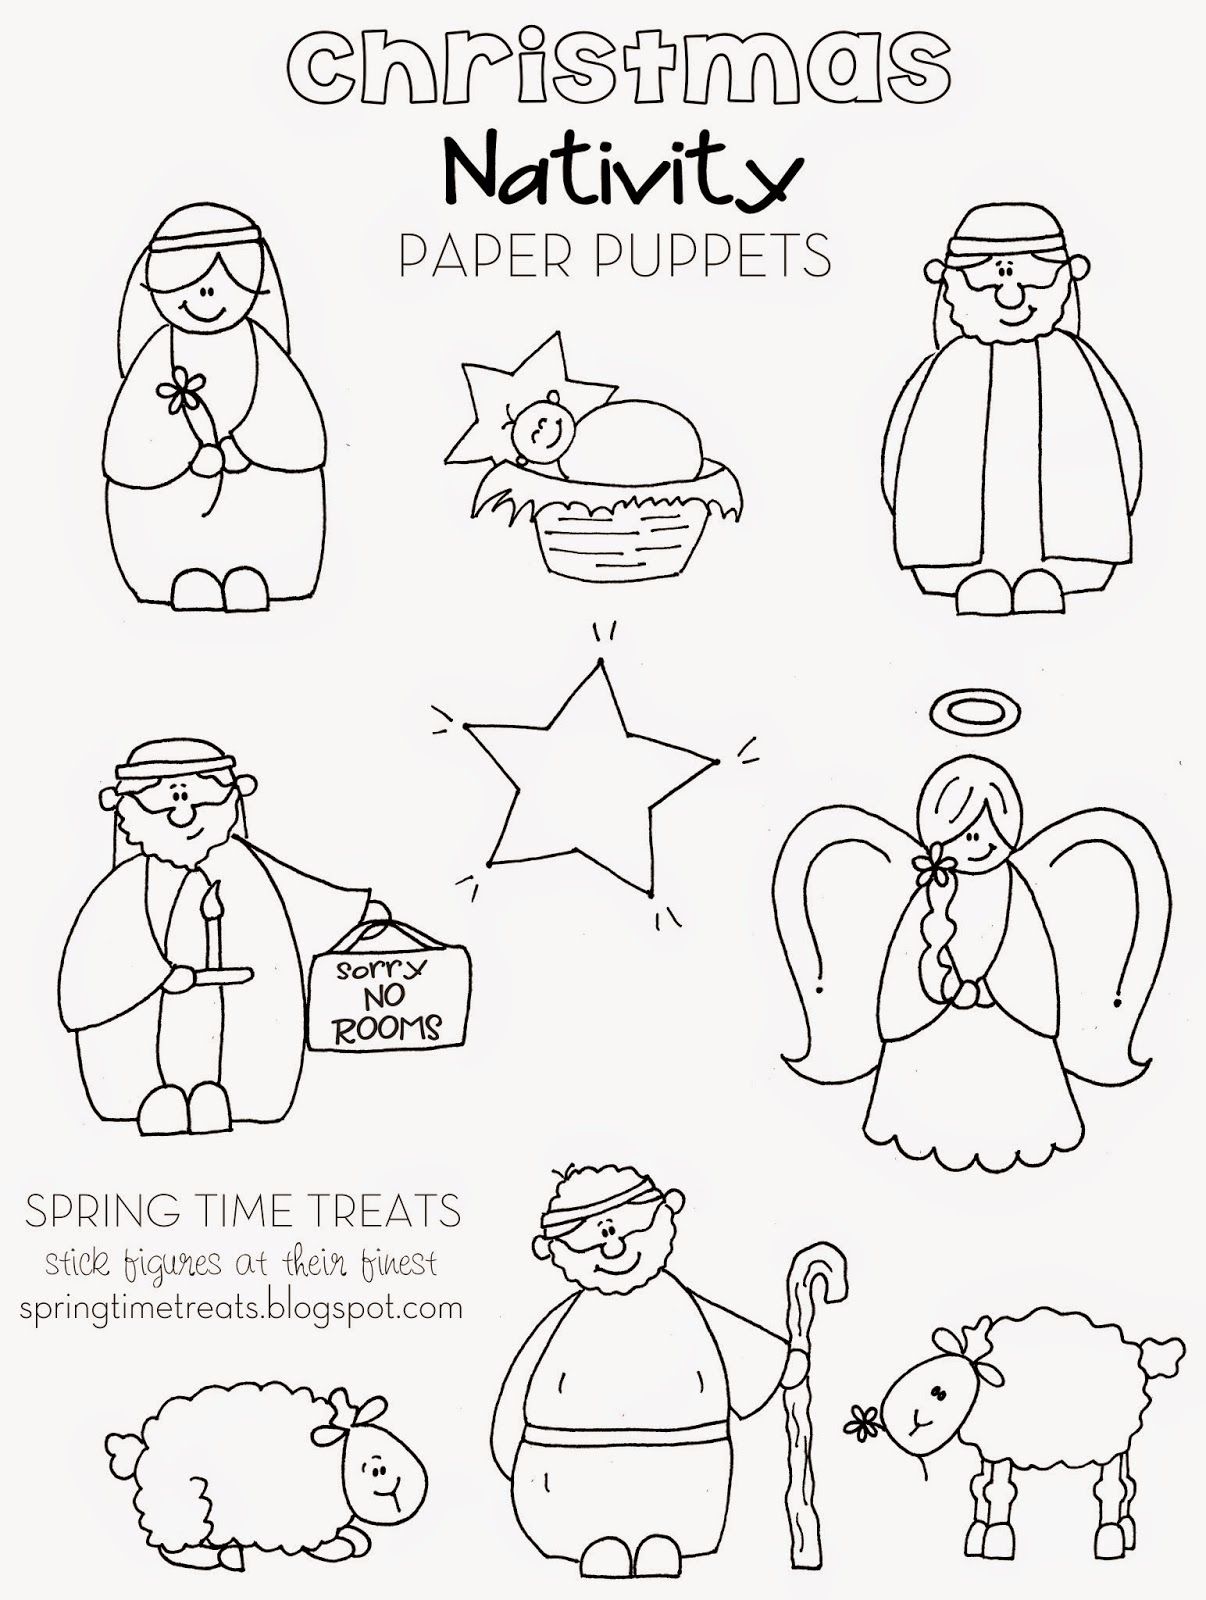 Nativity paper puppets